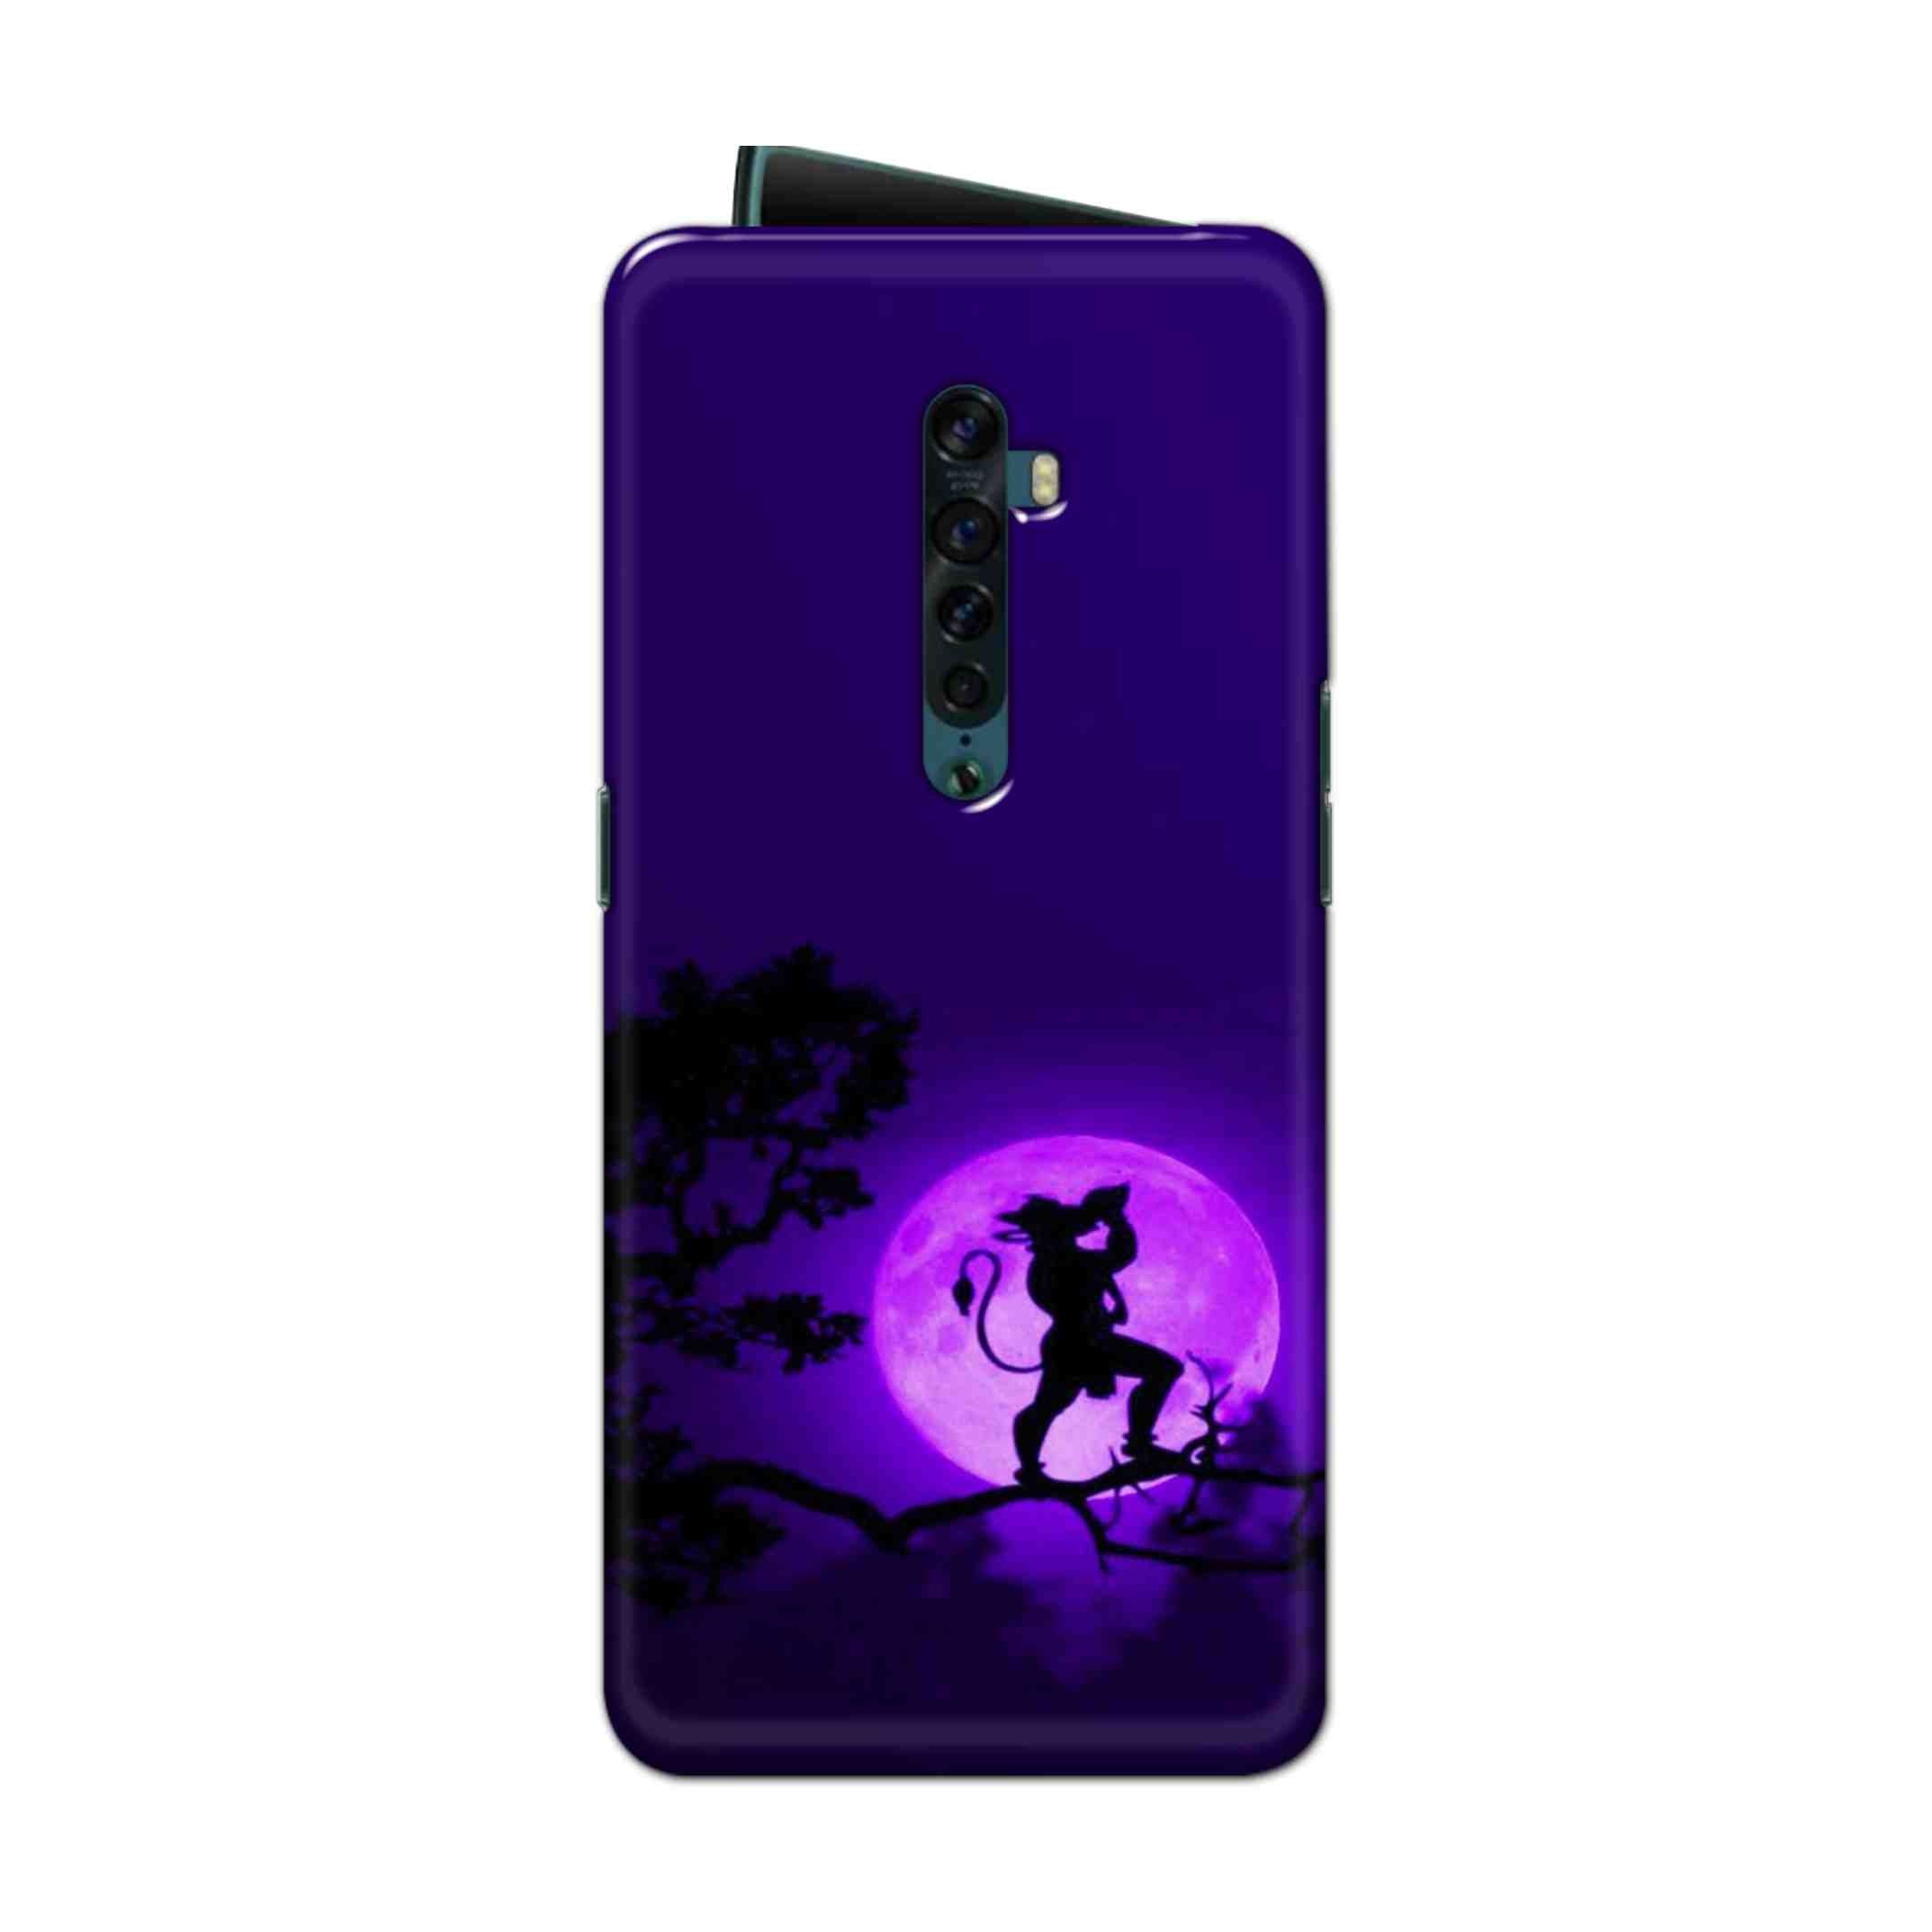 Buy Hanuman Hard Back Mobile Phone Case Cover For Oppo Reno 2 Online